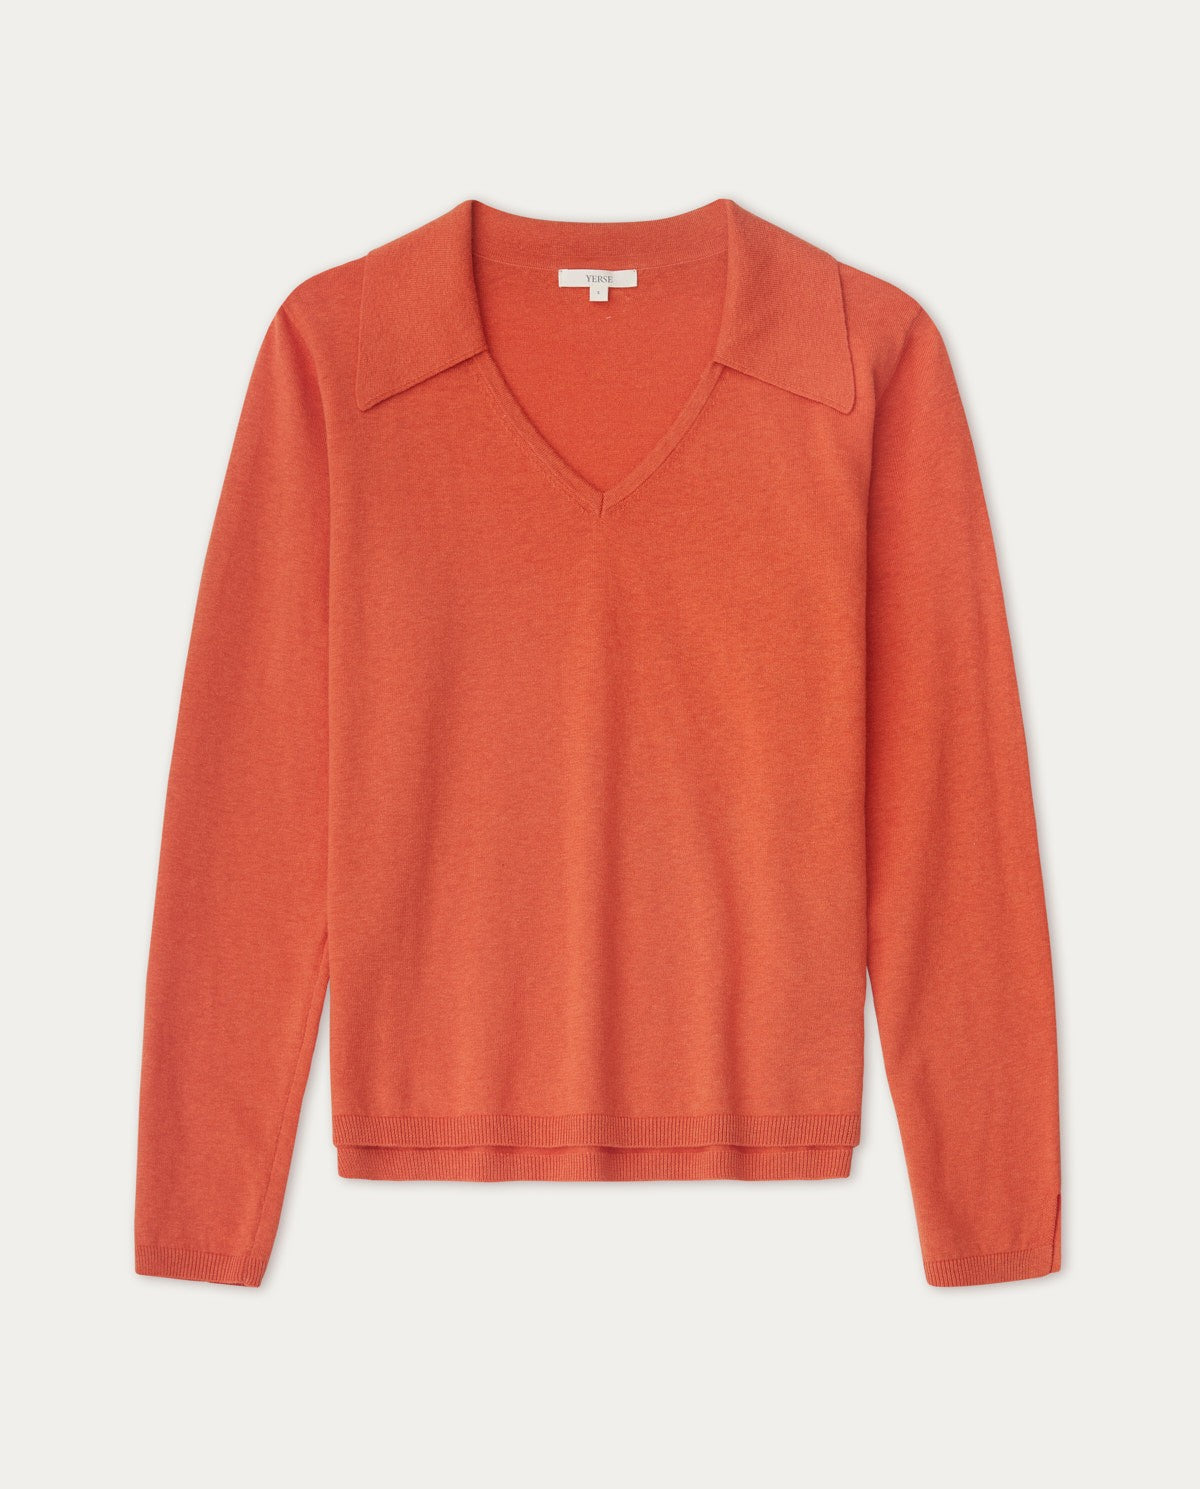 Yerse Polo Neck Sweater in Reddish Orange